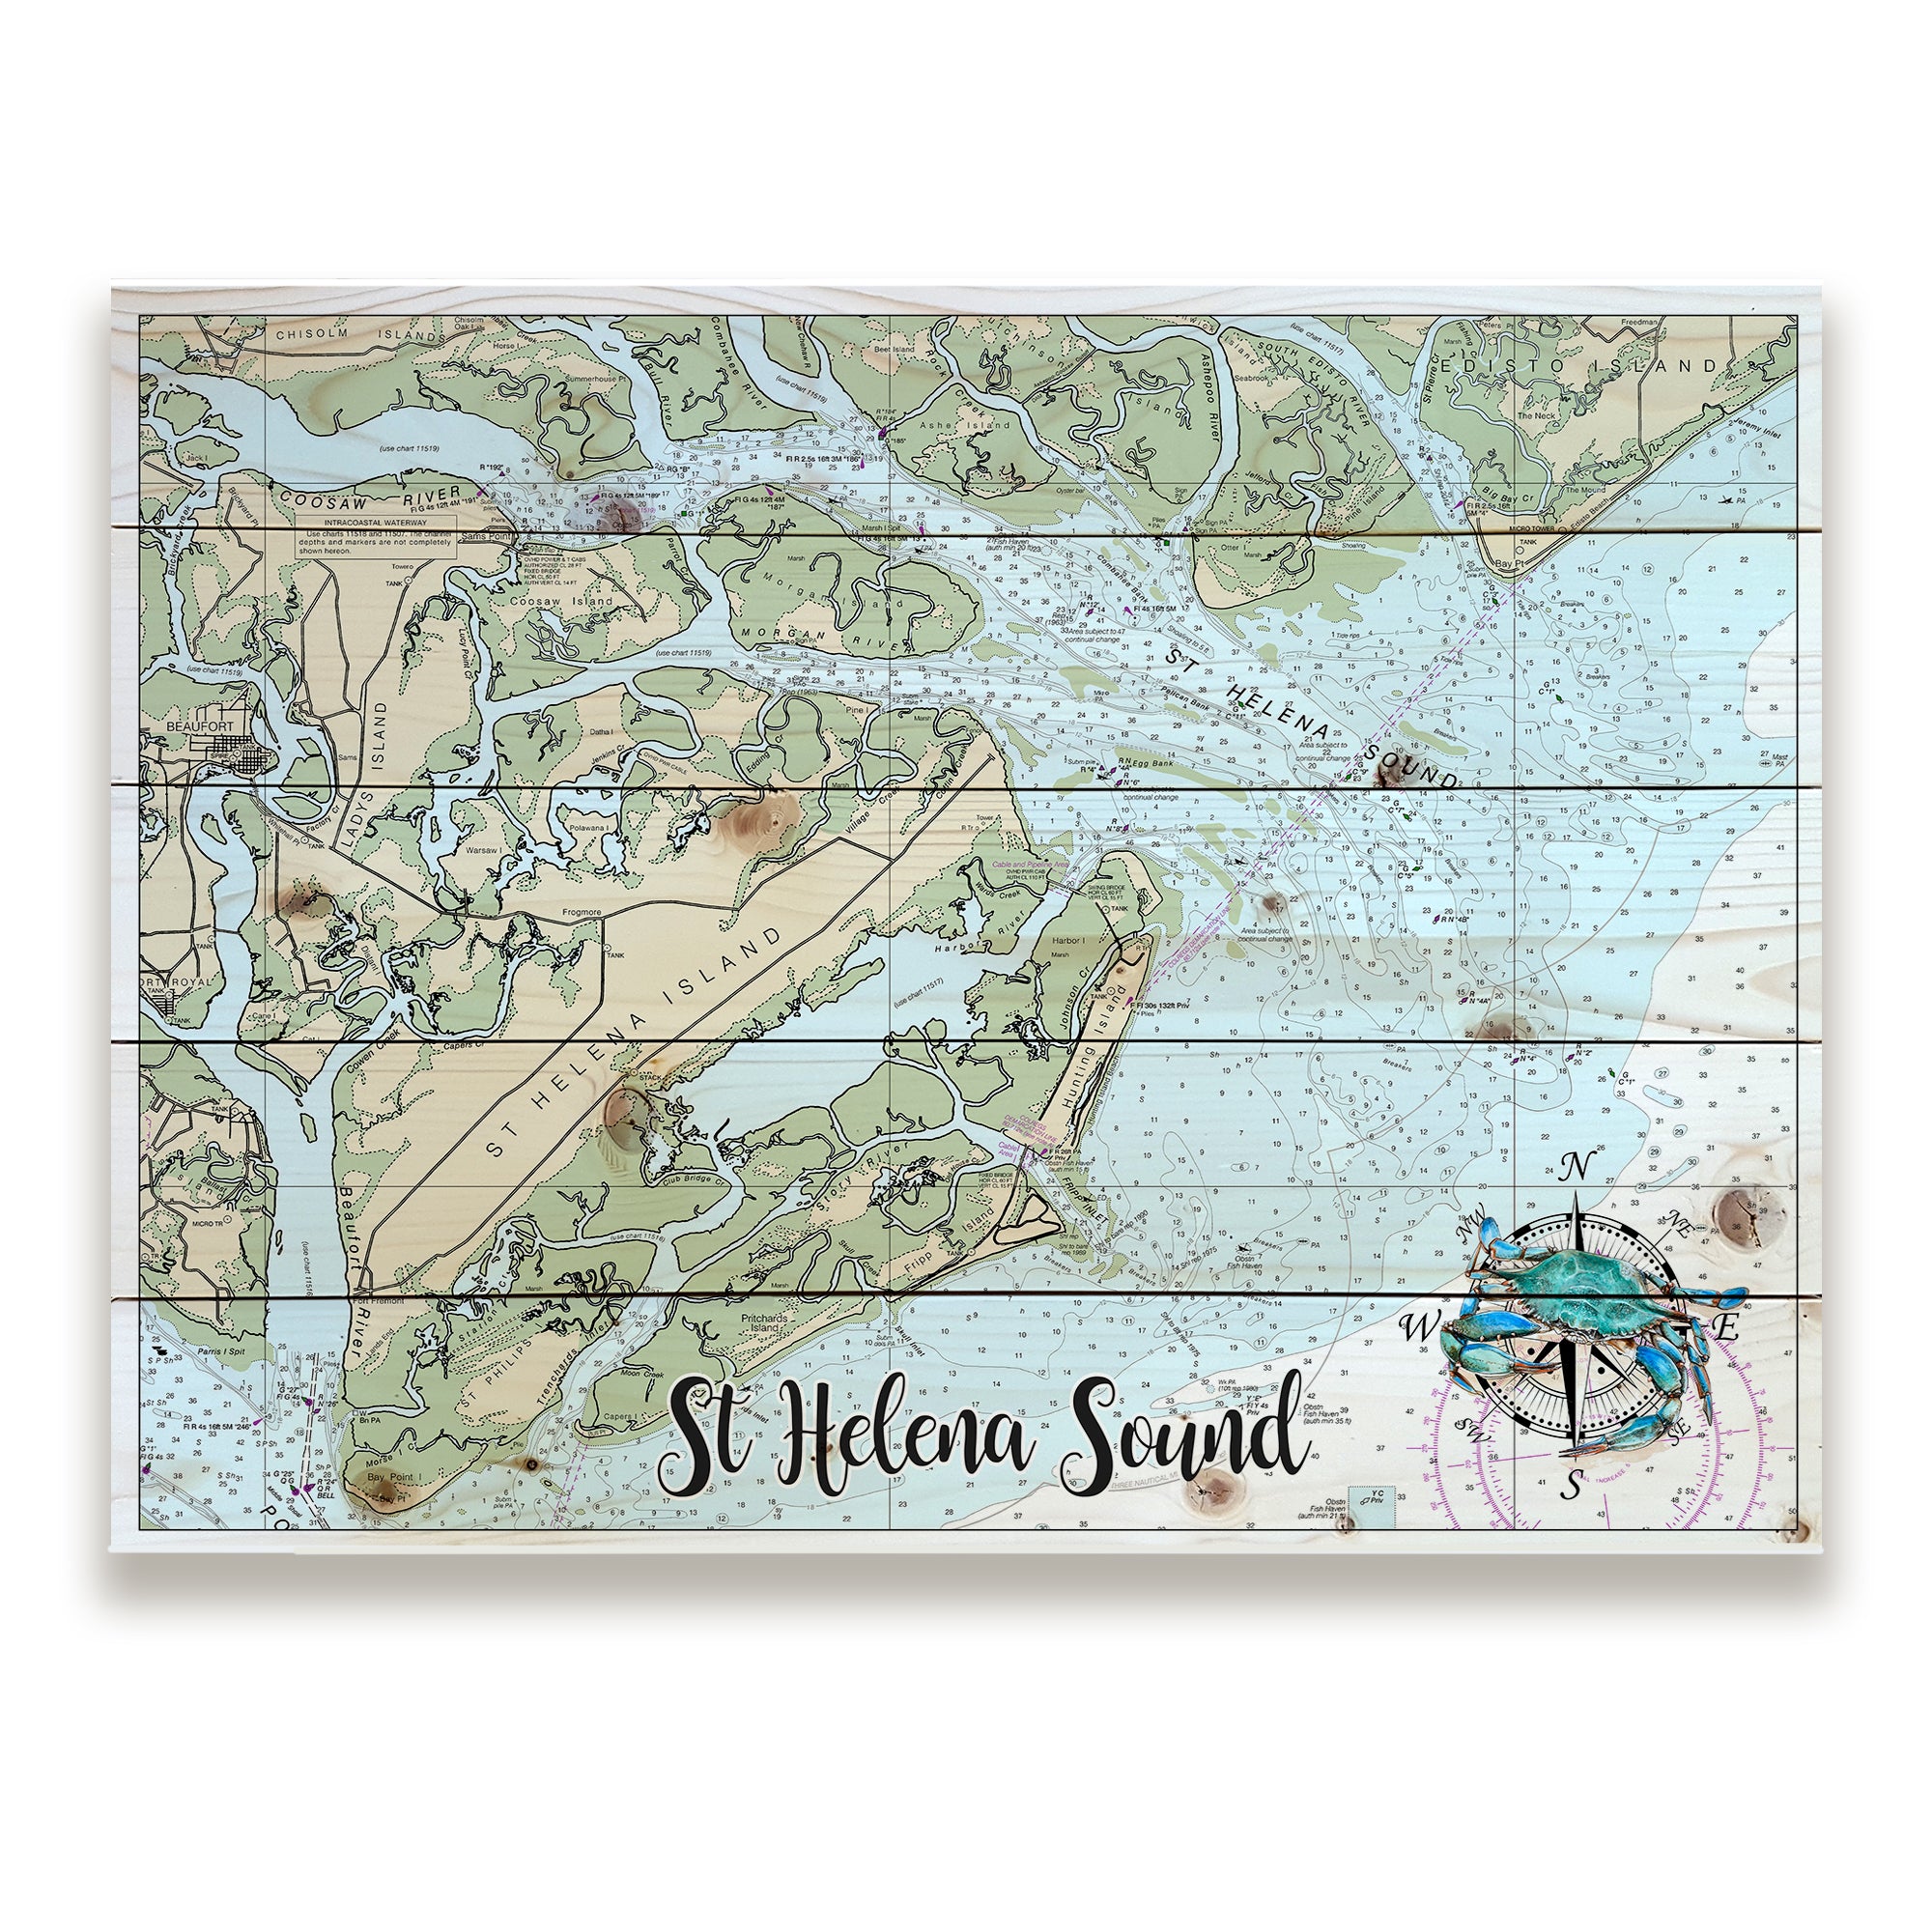 St. Helena Sound- Close Up Pallet Map